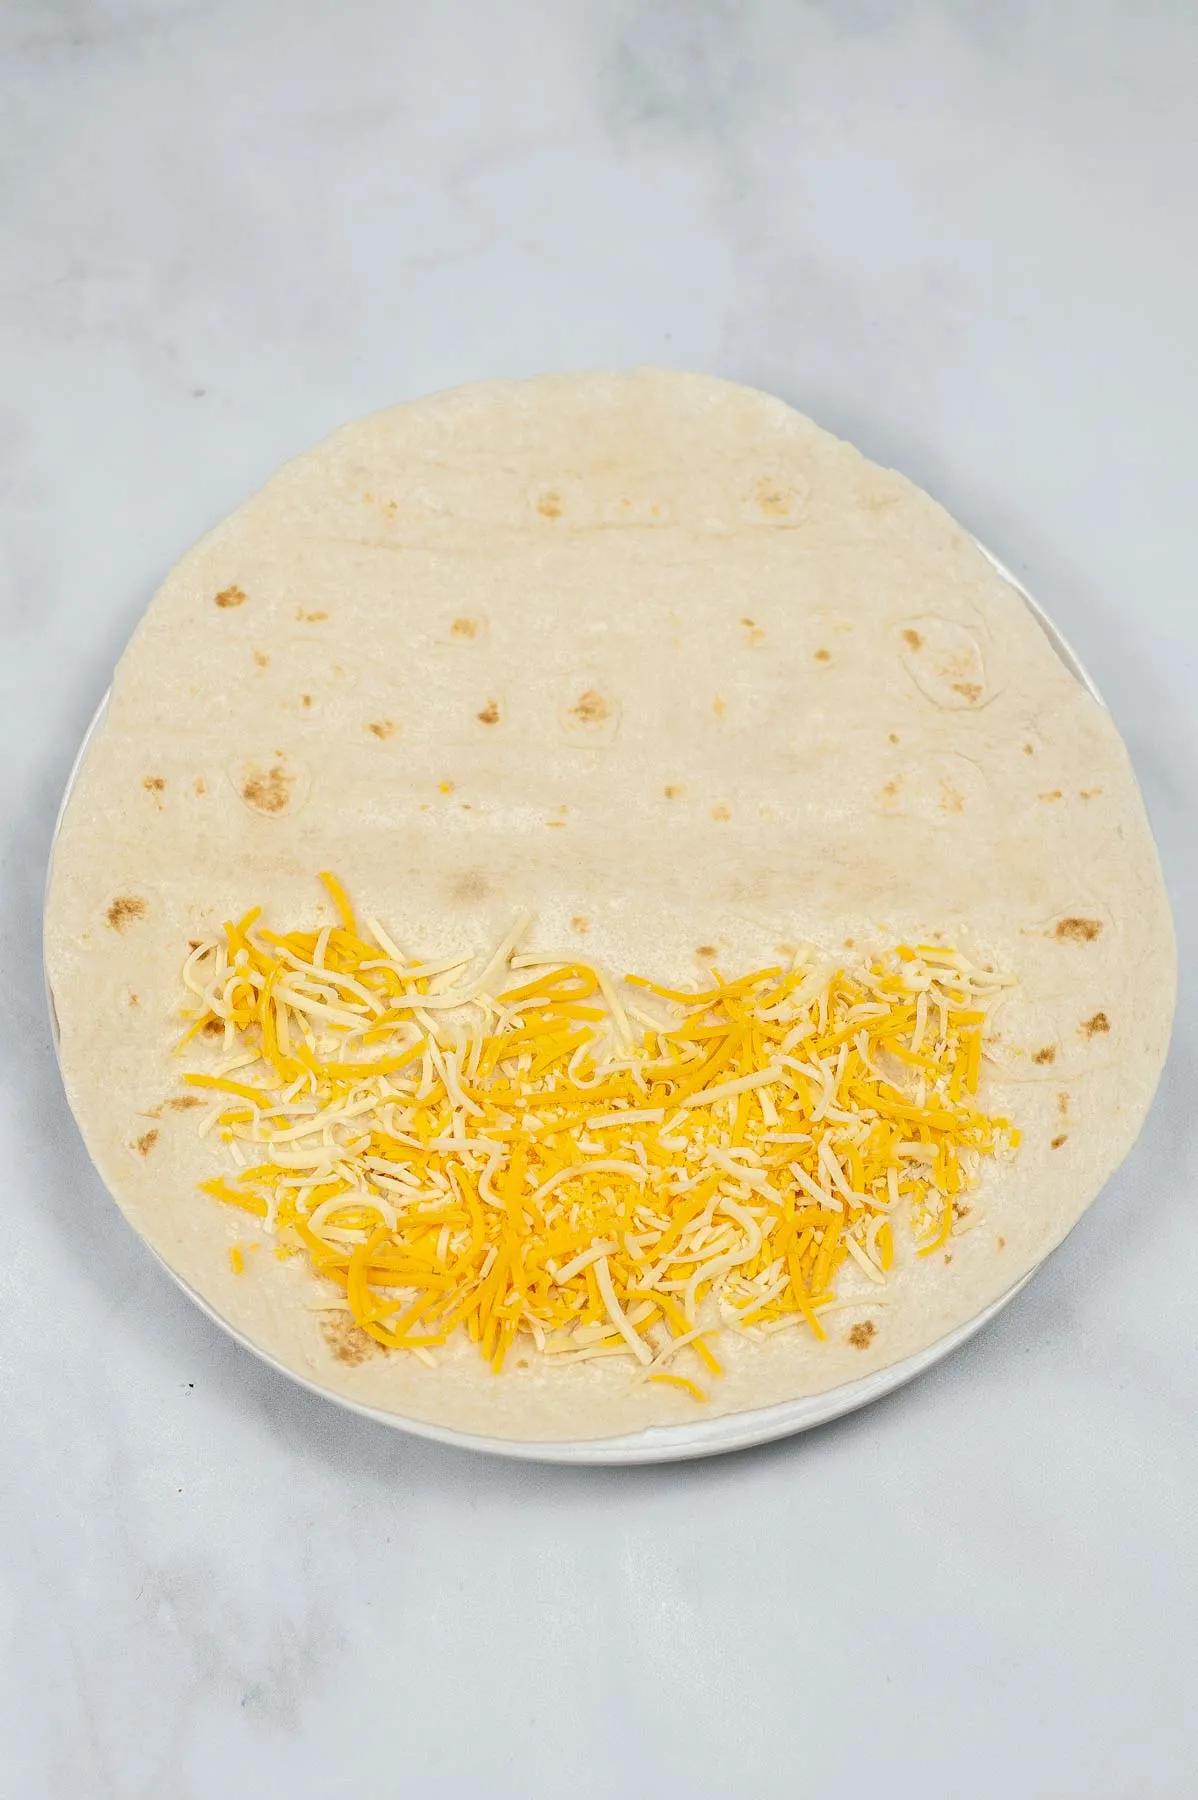 Cheese on a tortilla to make a quesadilla.